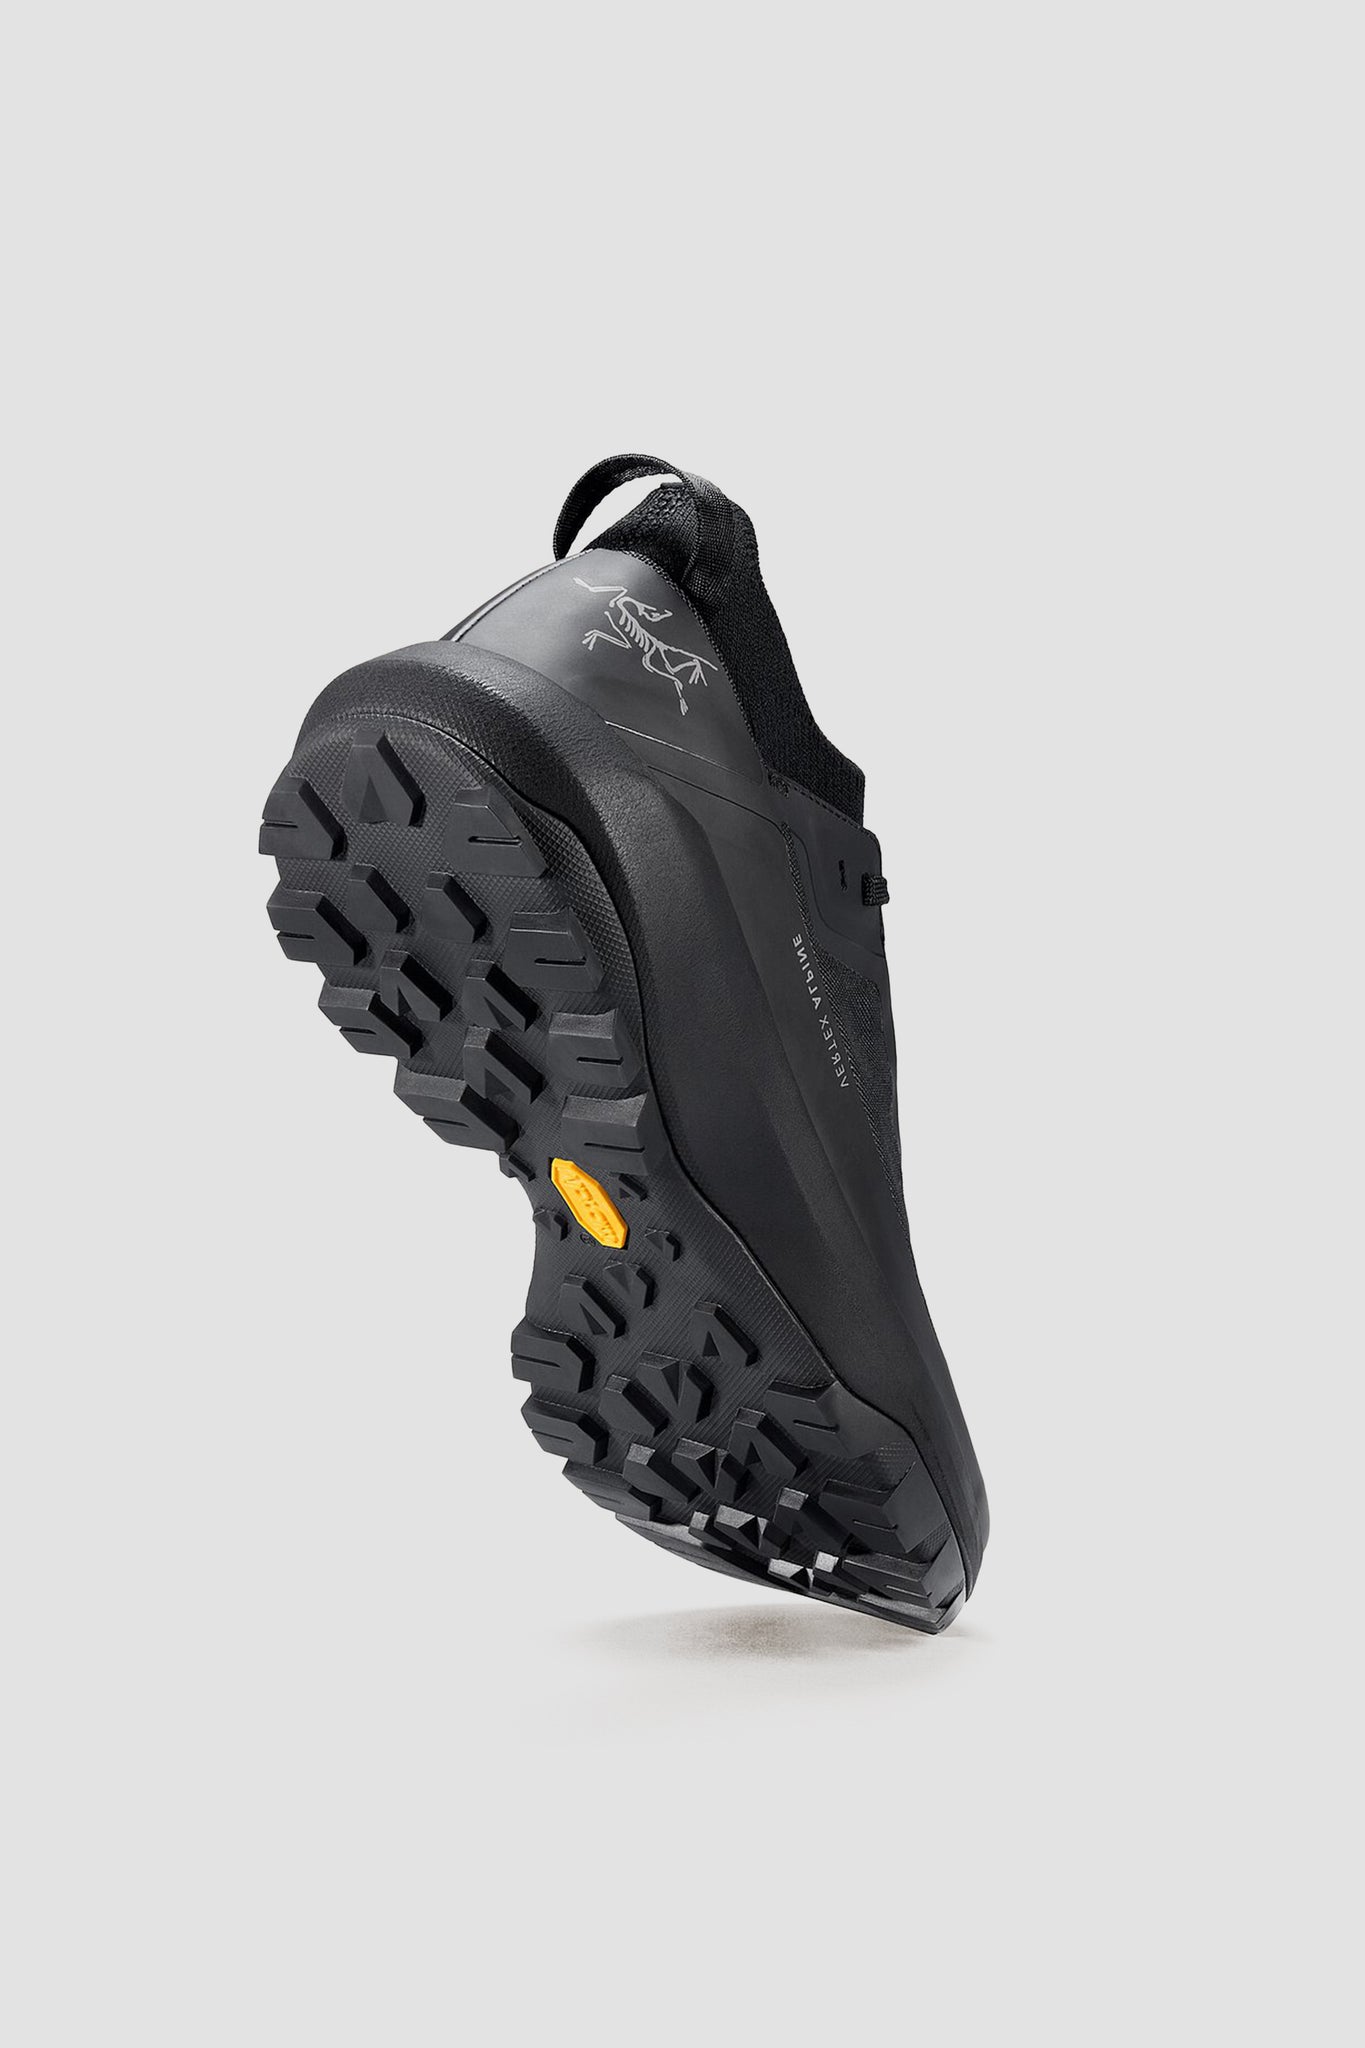 Arc'teryx Men's Vertex Alpine Shoe in Black/Black